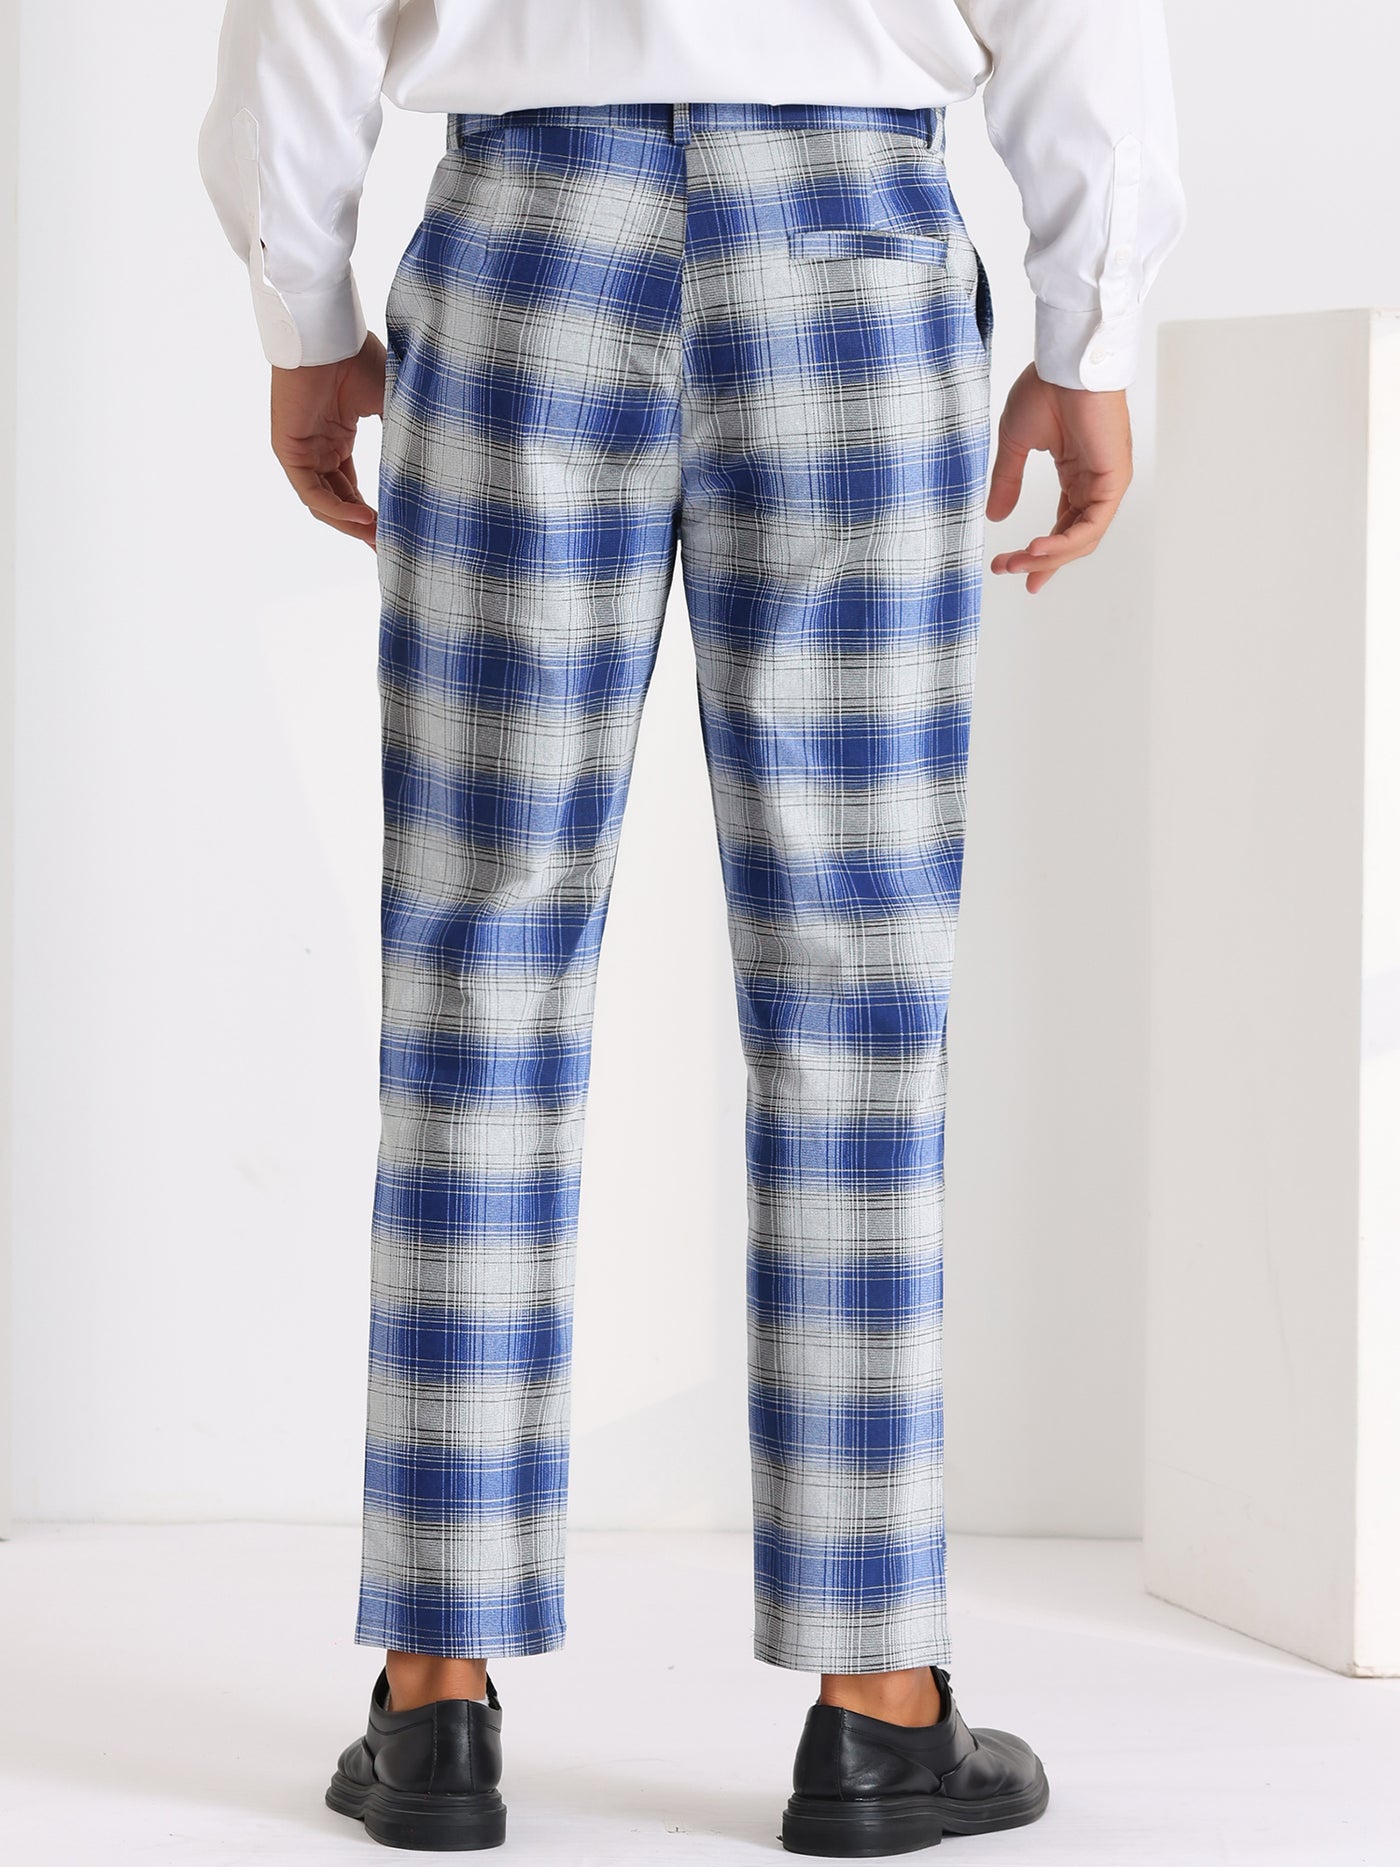 Bublédon Classic Checked Dress Pants for Men's Flat Front Plaid Pattern Trousers